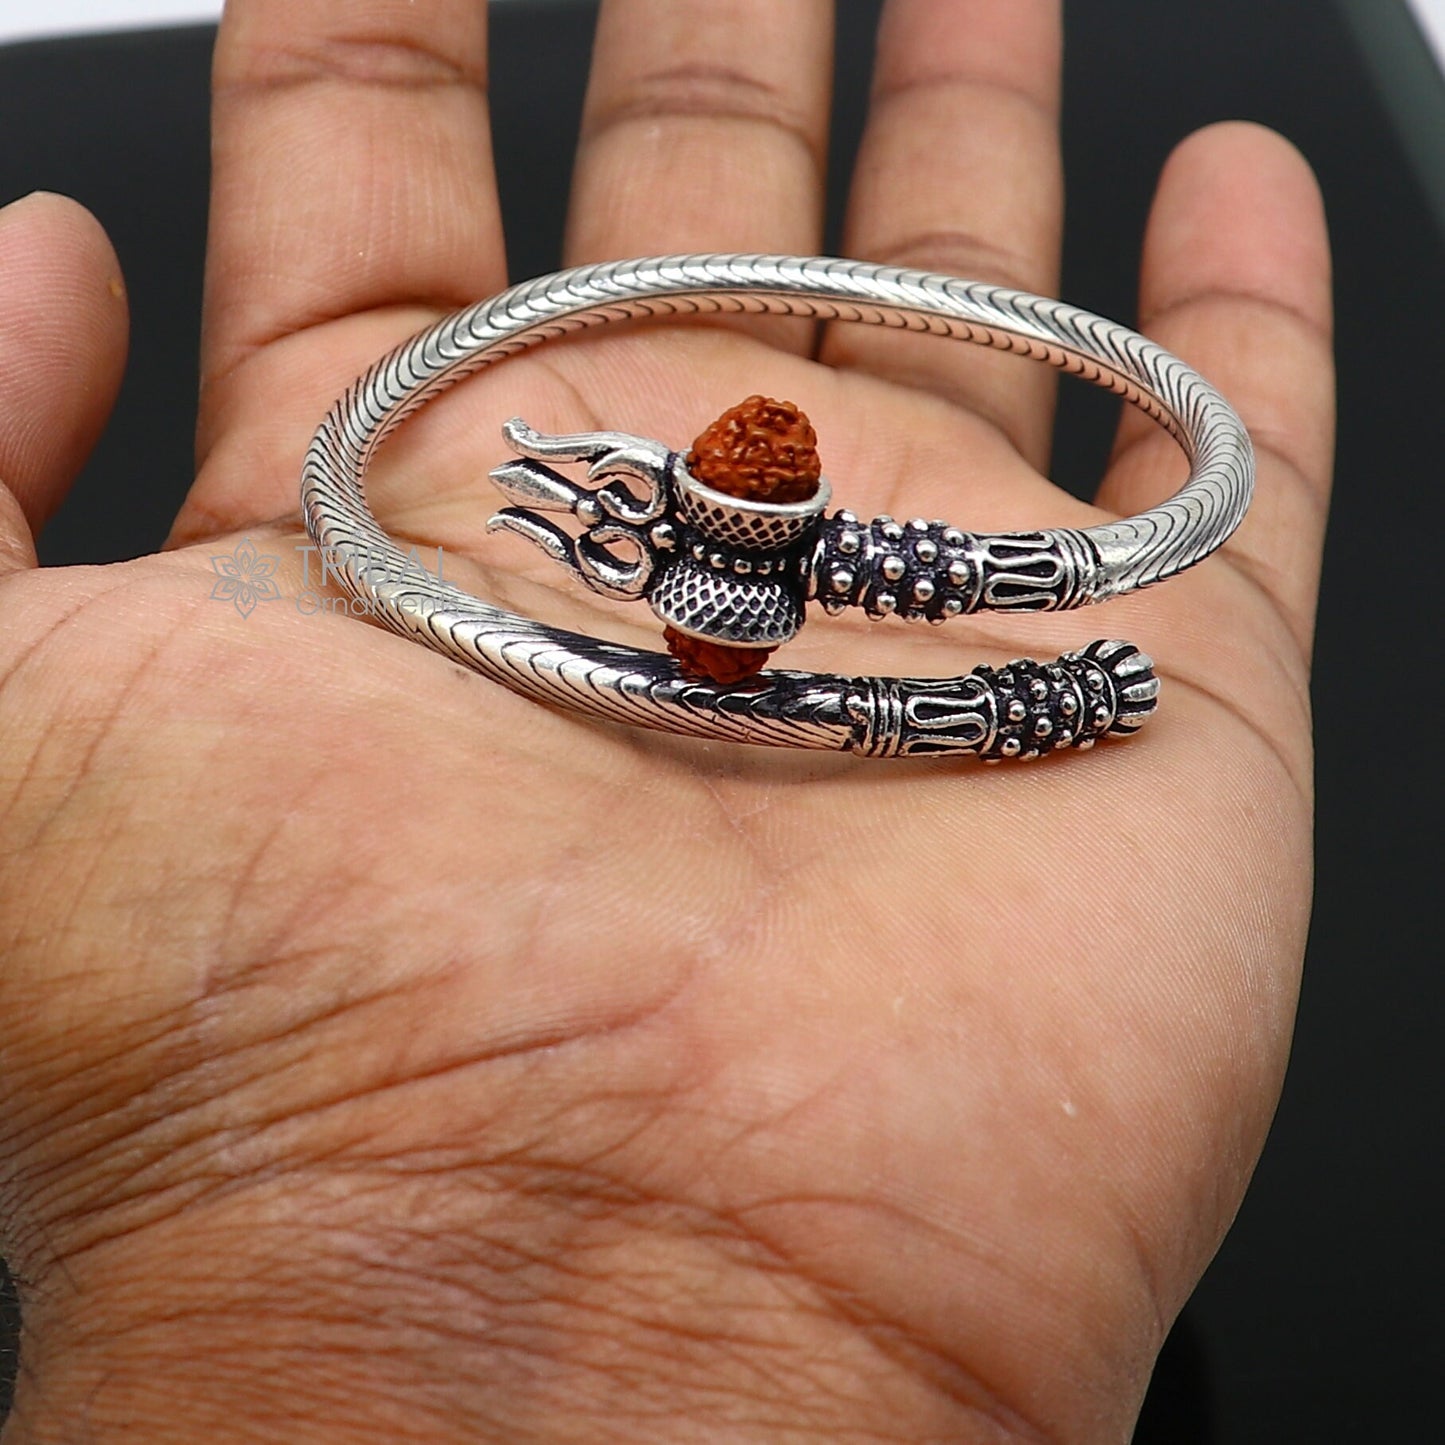 Trendy Lord Shiva trident trishul trishool kada 925 Sterling silver handmade bangle bracelet with natural Rudraksha magical  kada nsk741 - TRIBAL ORNAMENTS